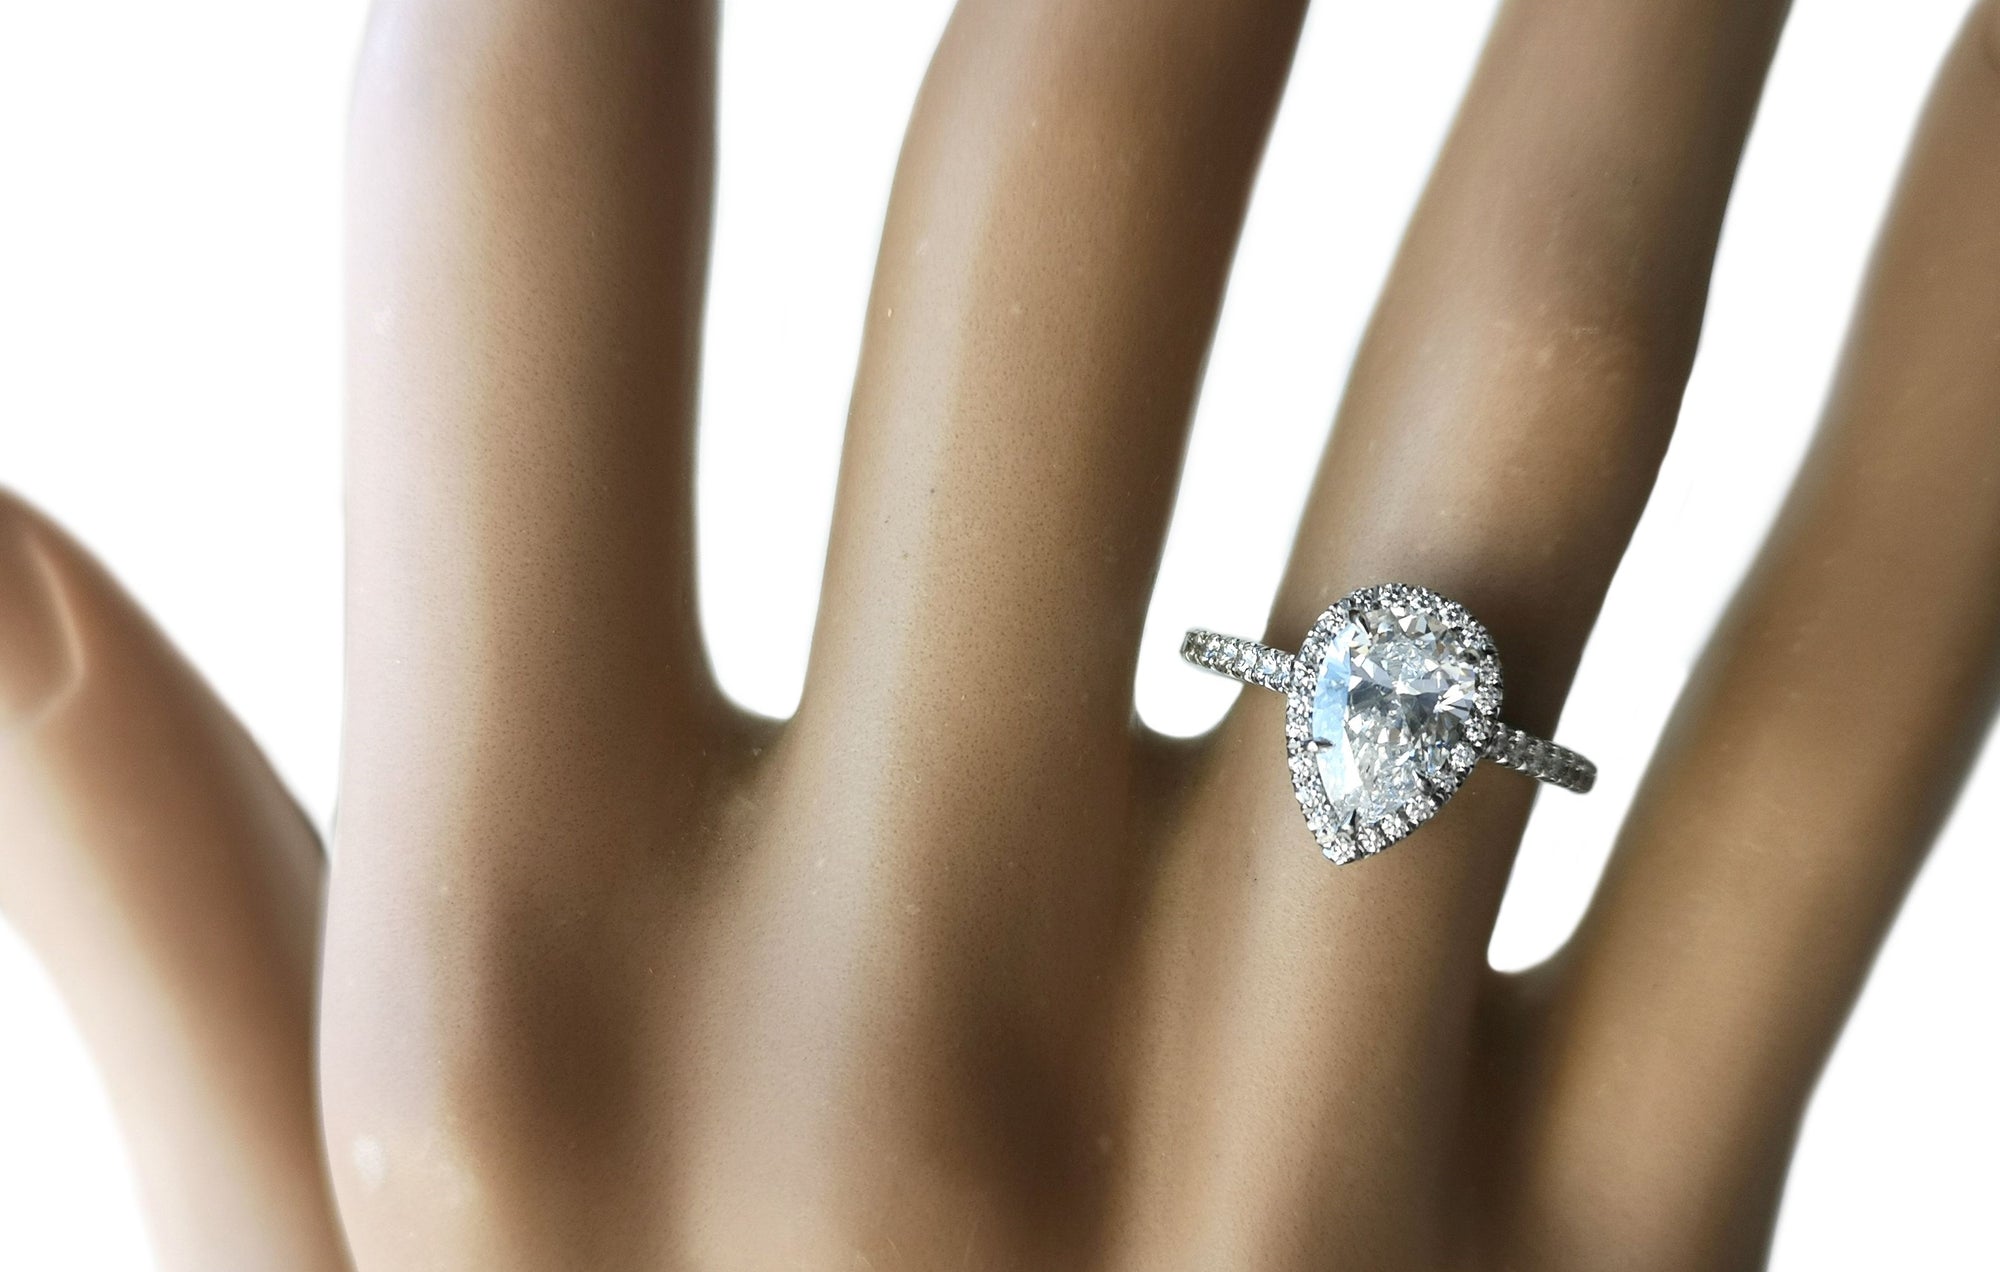 Tiffany & Co. 1.03ct E/VS1 Pear Shaped Soleste Diamond Engagement Ring on finger